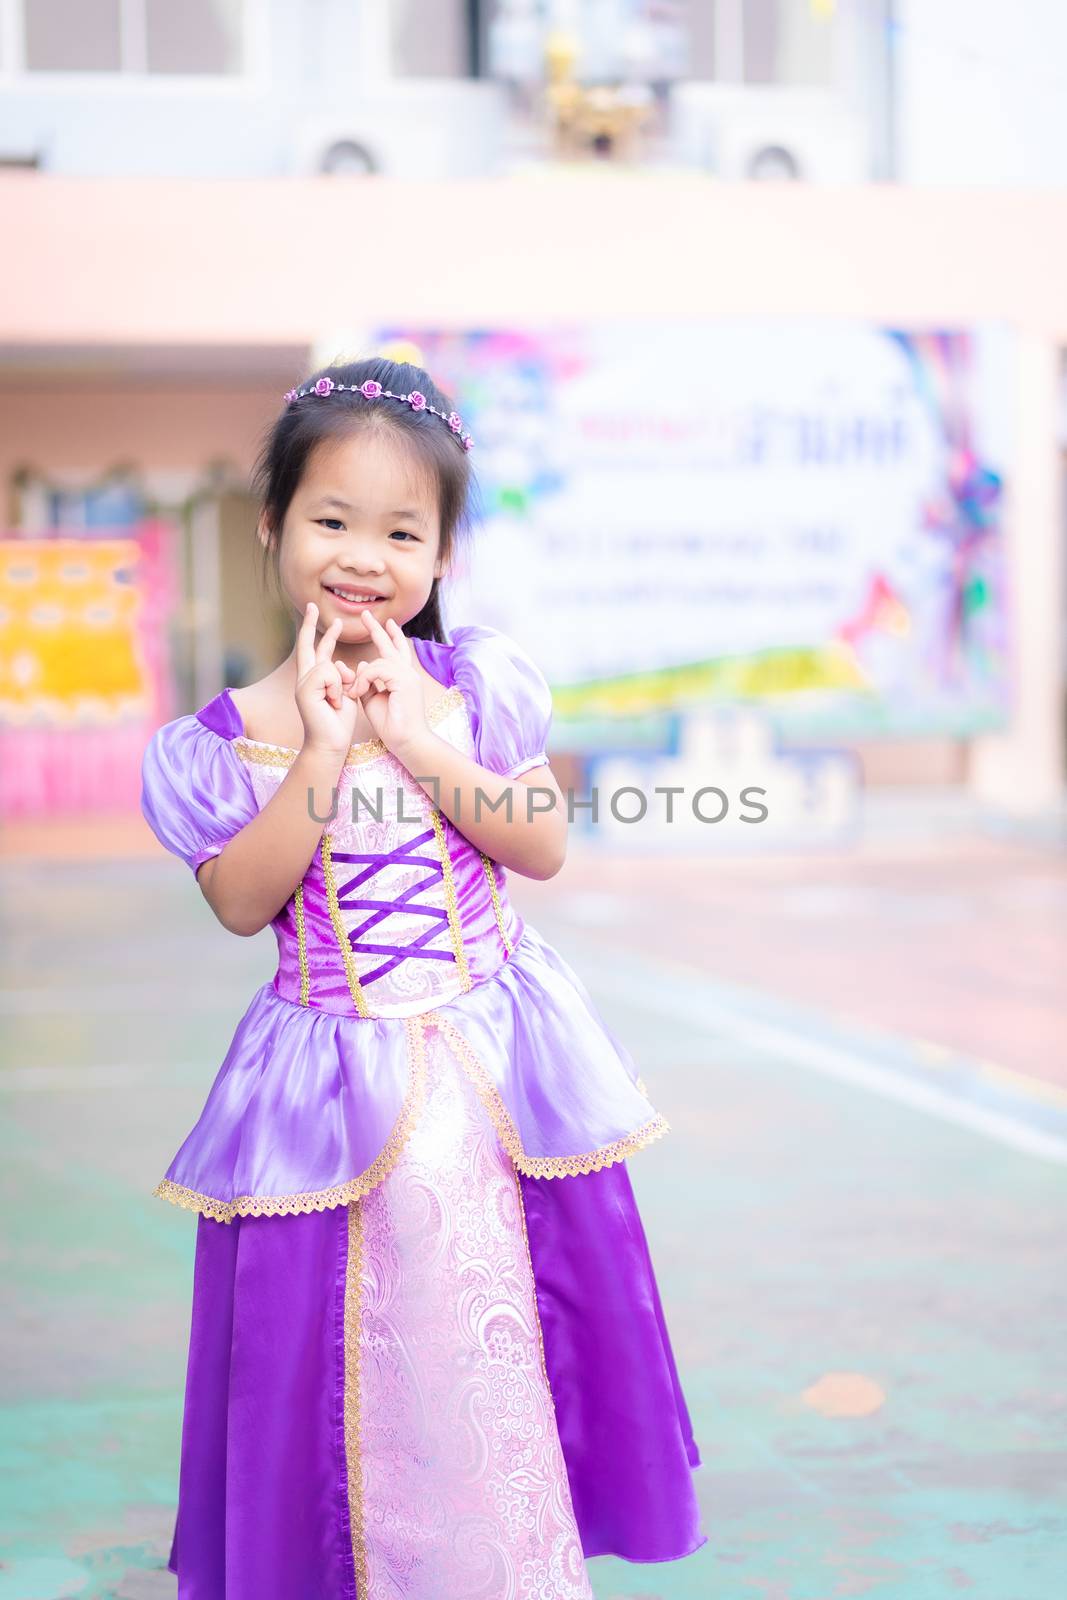 Portrait of cute smiling little girl in princess costume standing in school